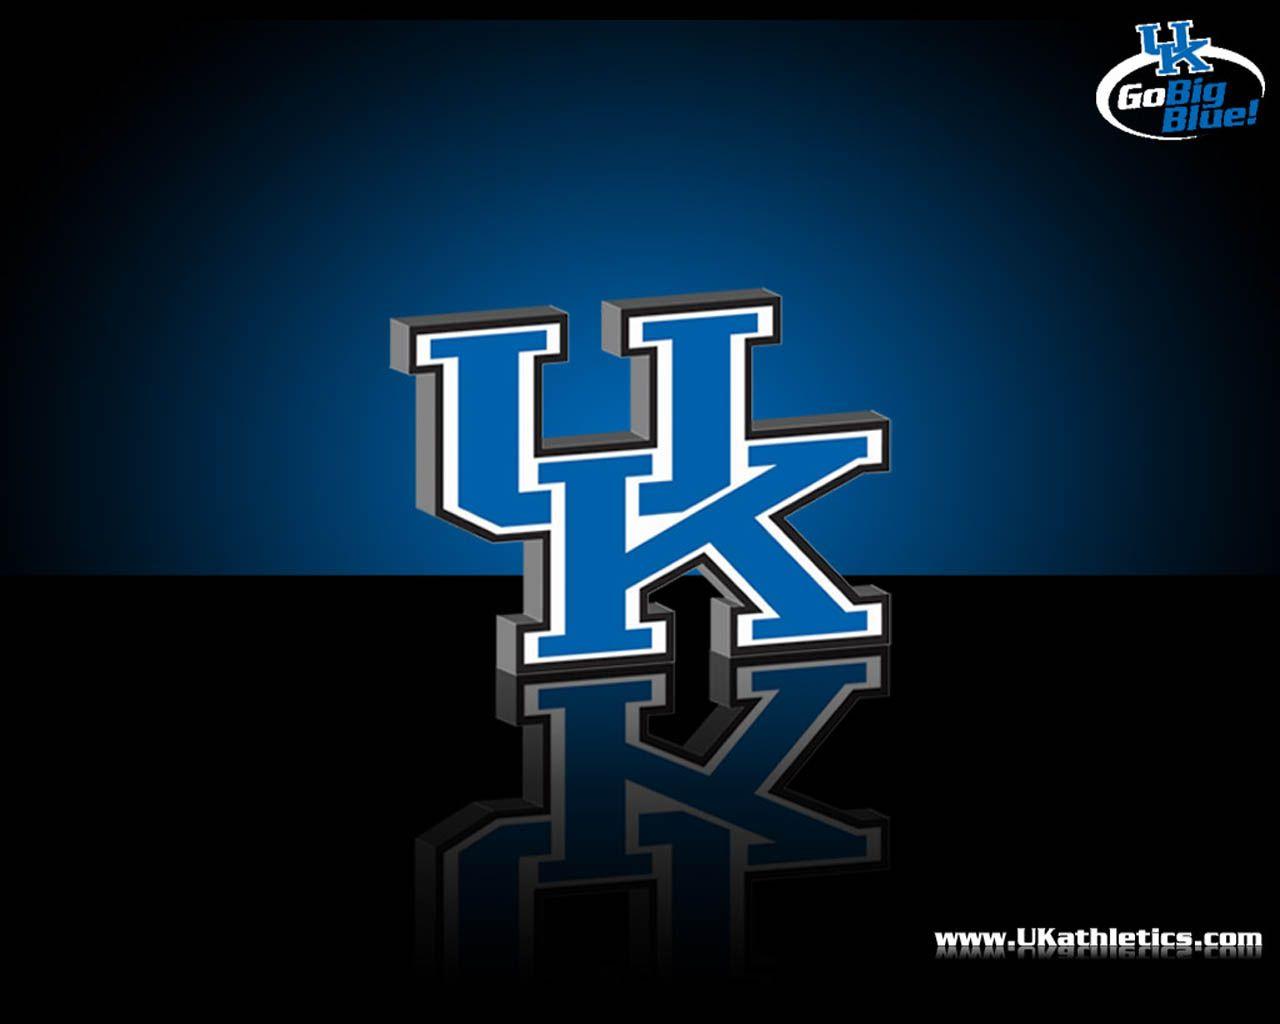 Kentucky Wildcats Wallpaper Download Free. Kentucky Wildcats